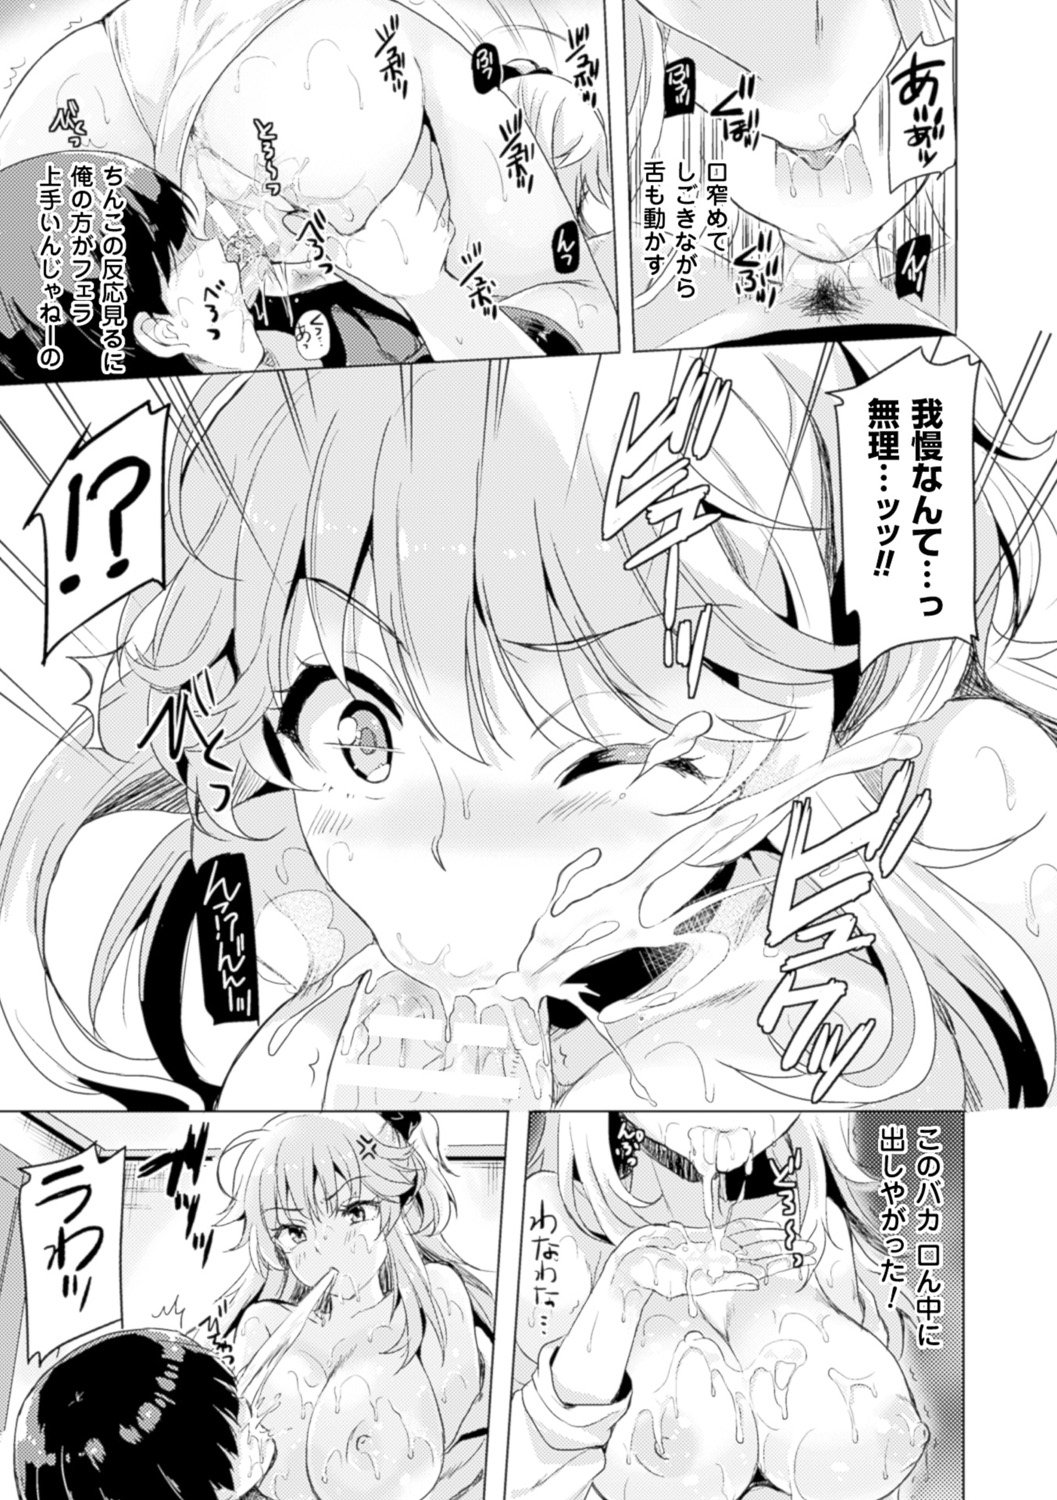 TSF M〜美少女美少女にセメラレゼッチョウ〜デジタル禁止Vol。 2